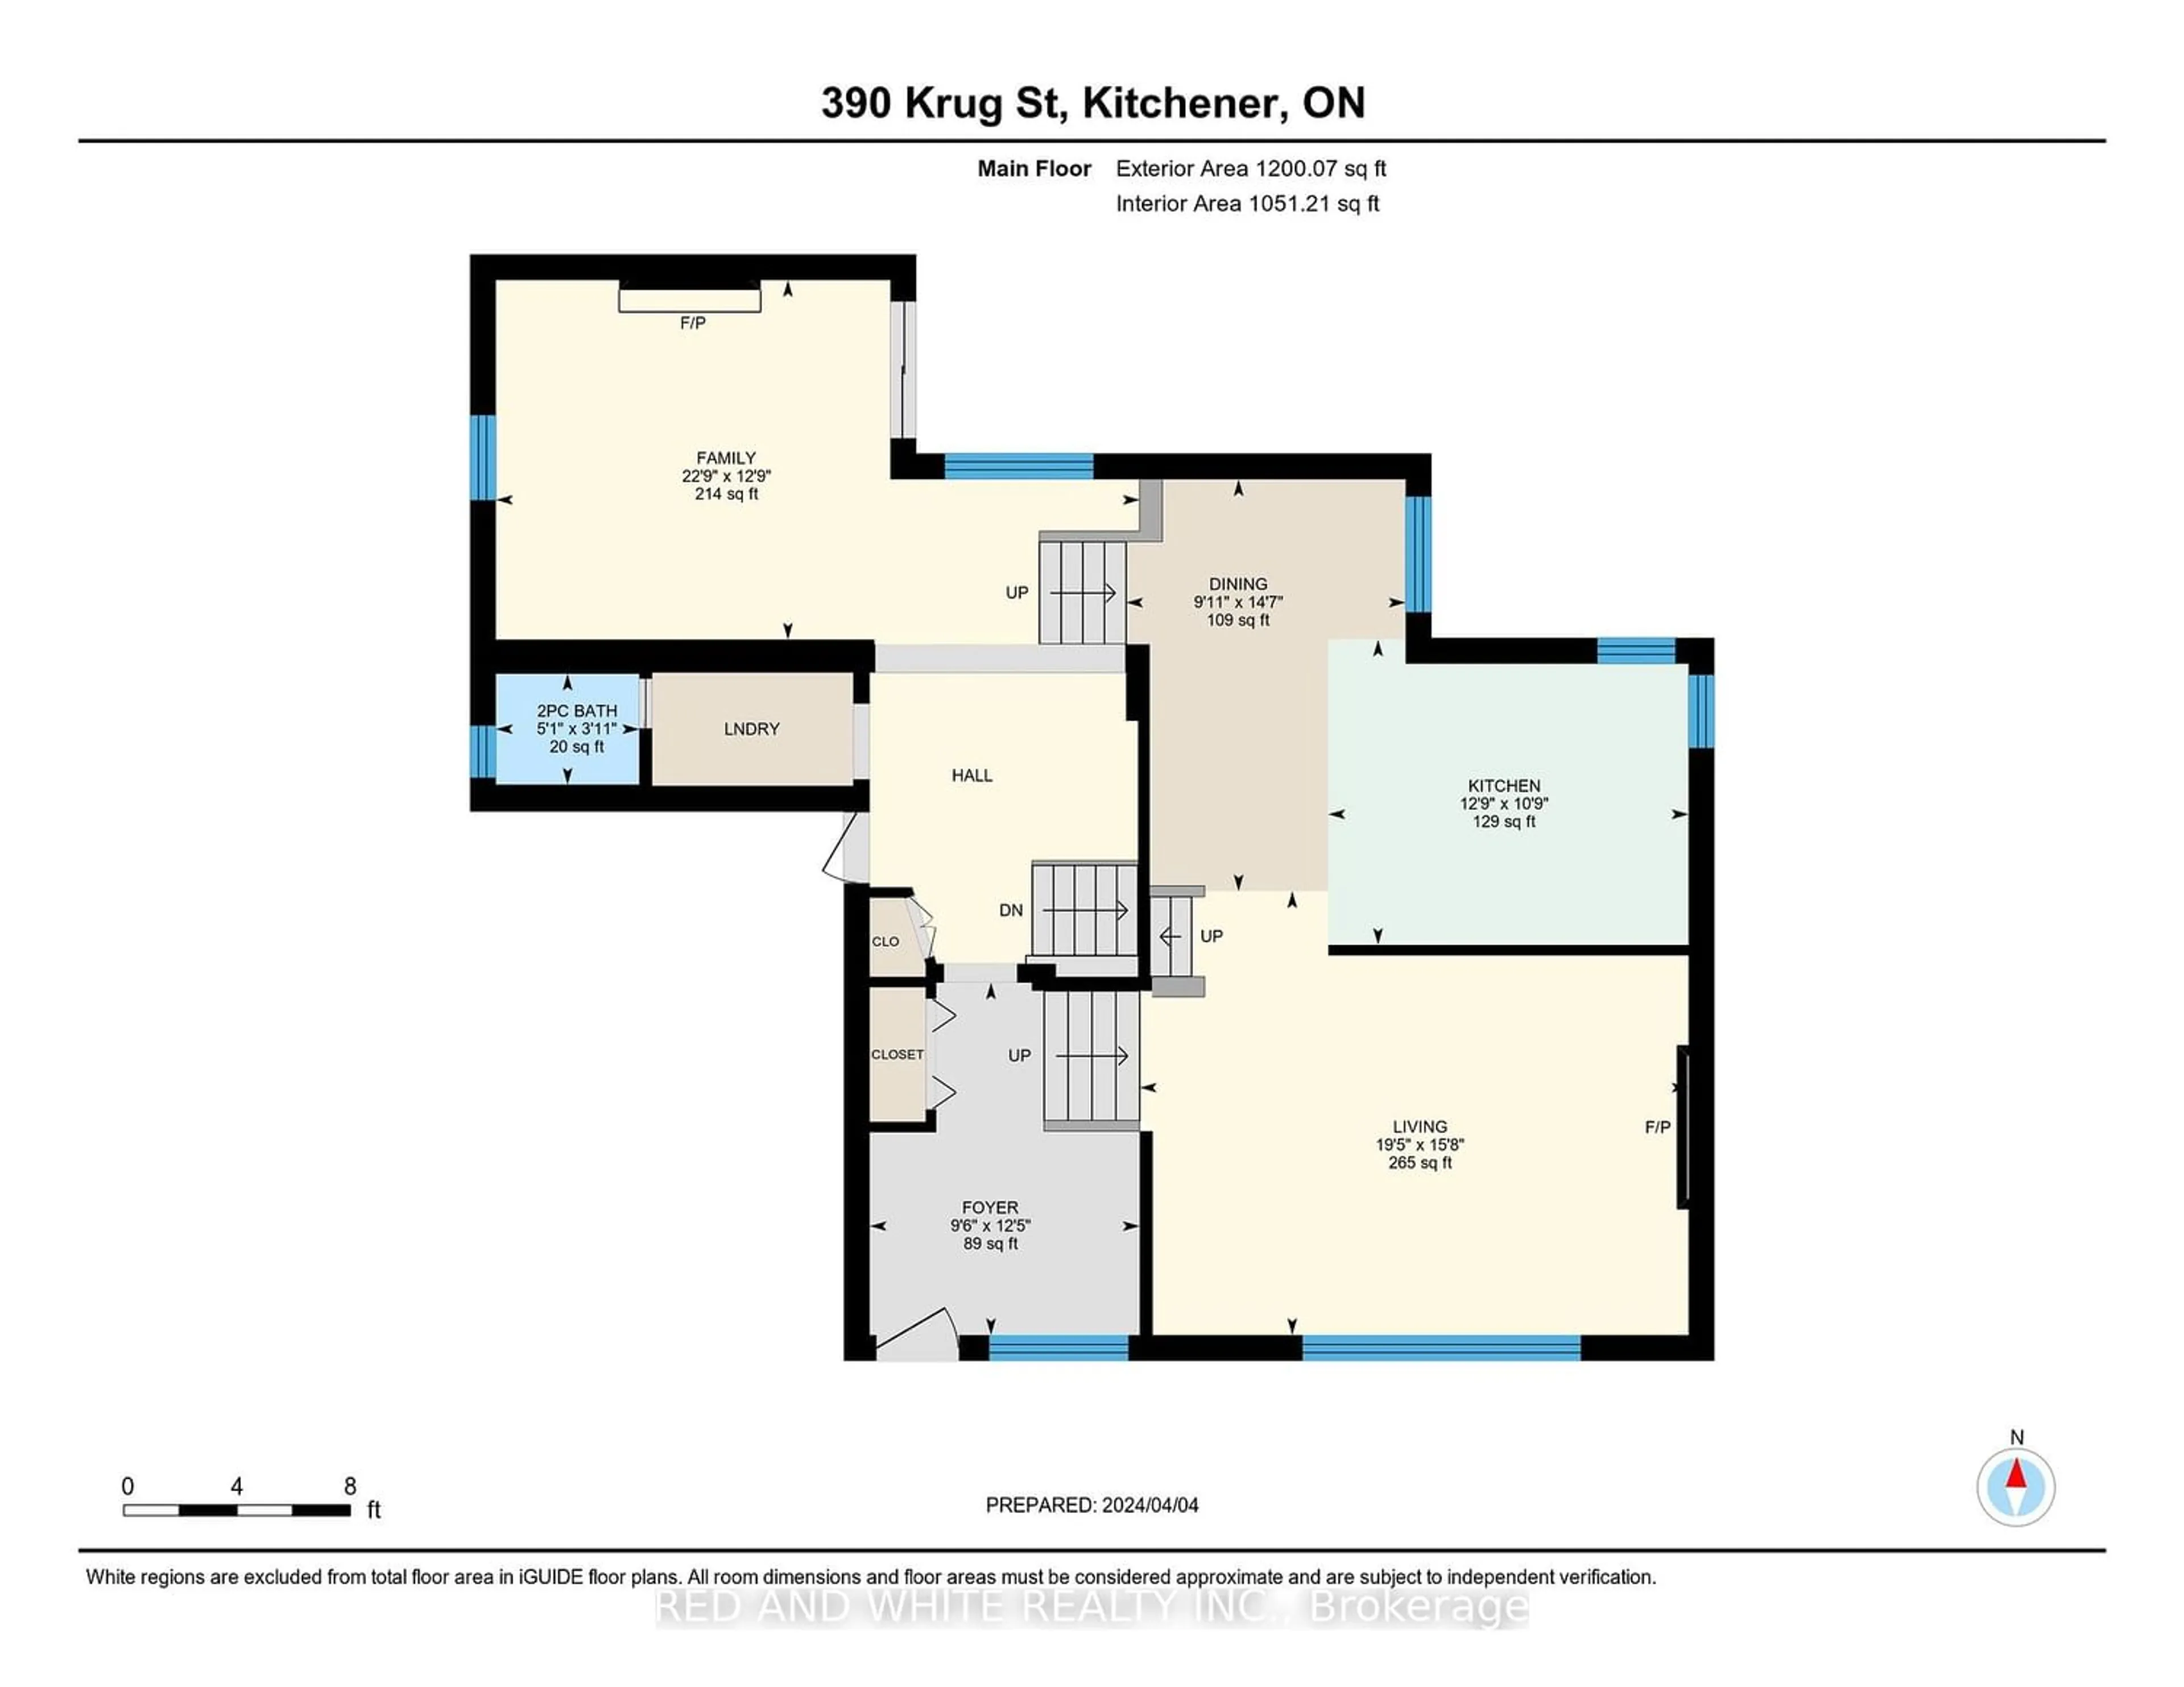 Floor plan for 390 Krug St, Kitchener Ontario N2B 1L1